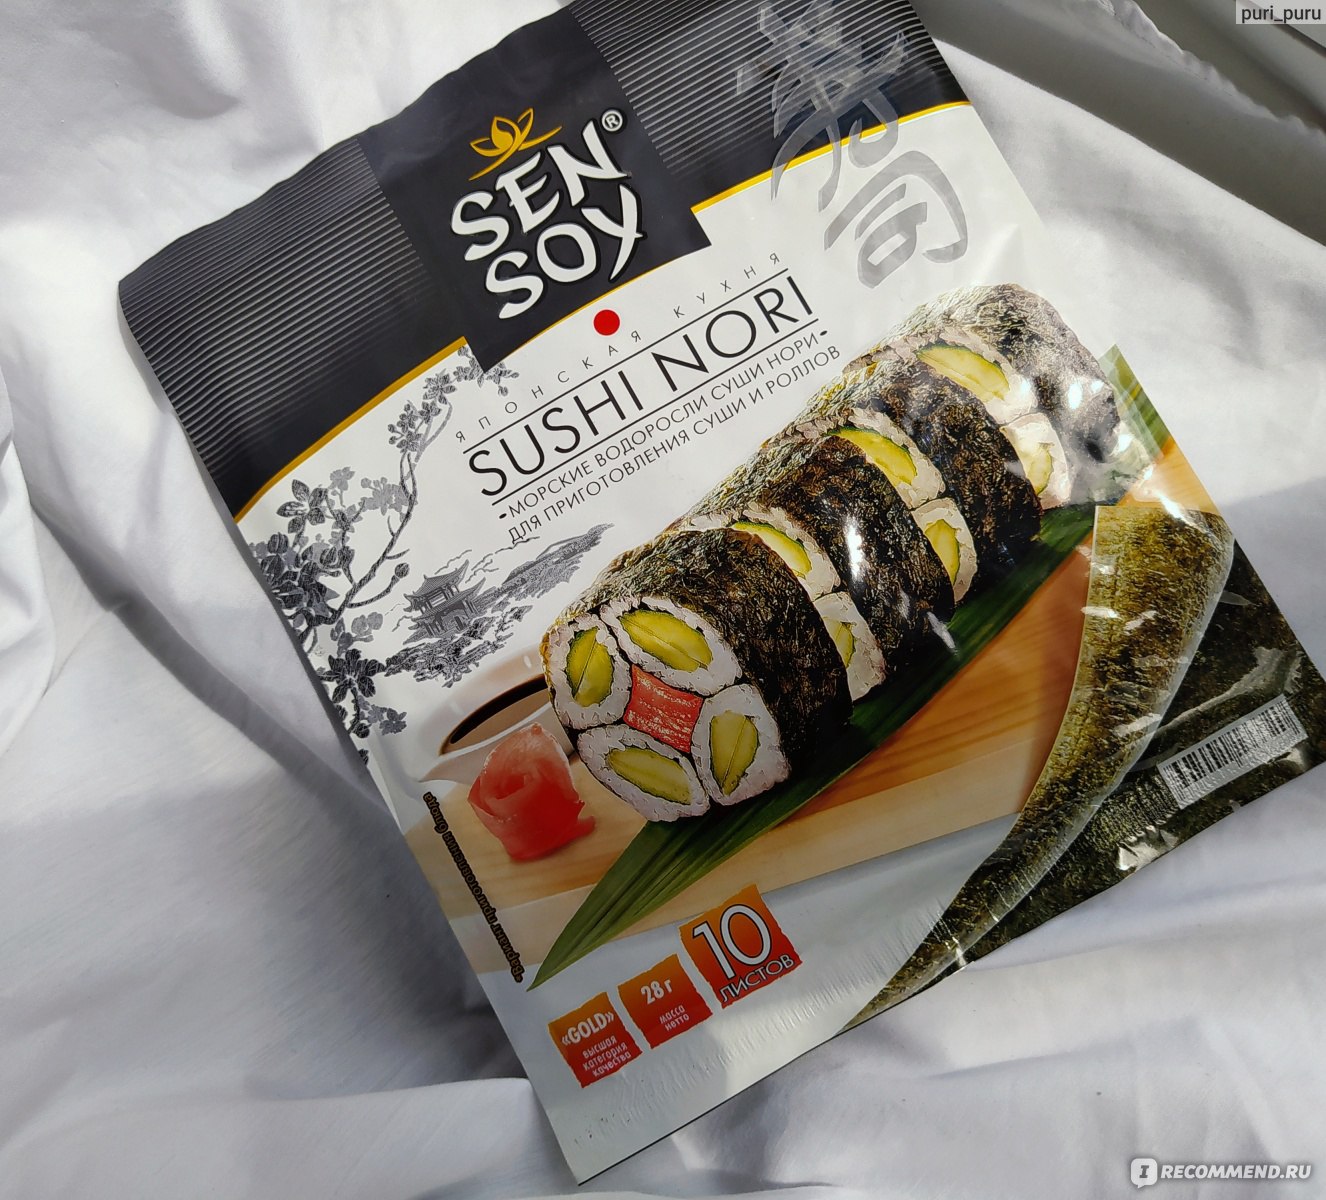 Sen soy набор для суши цена фото 115